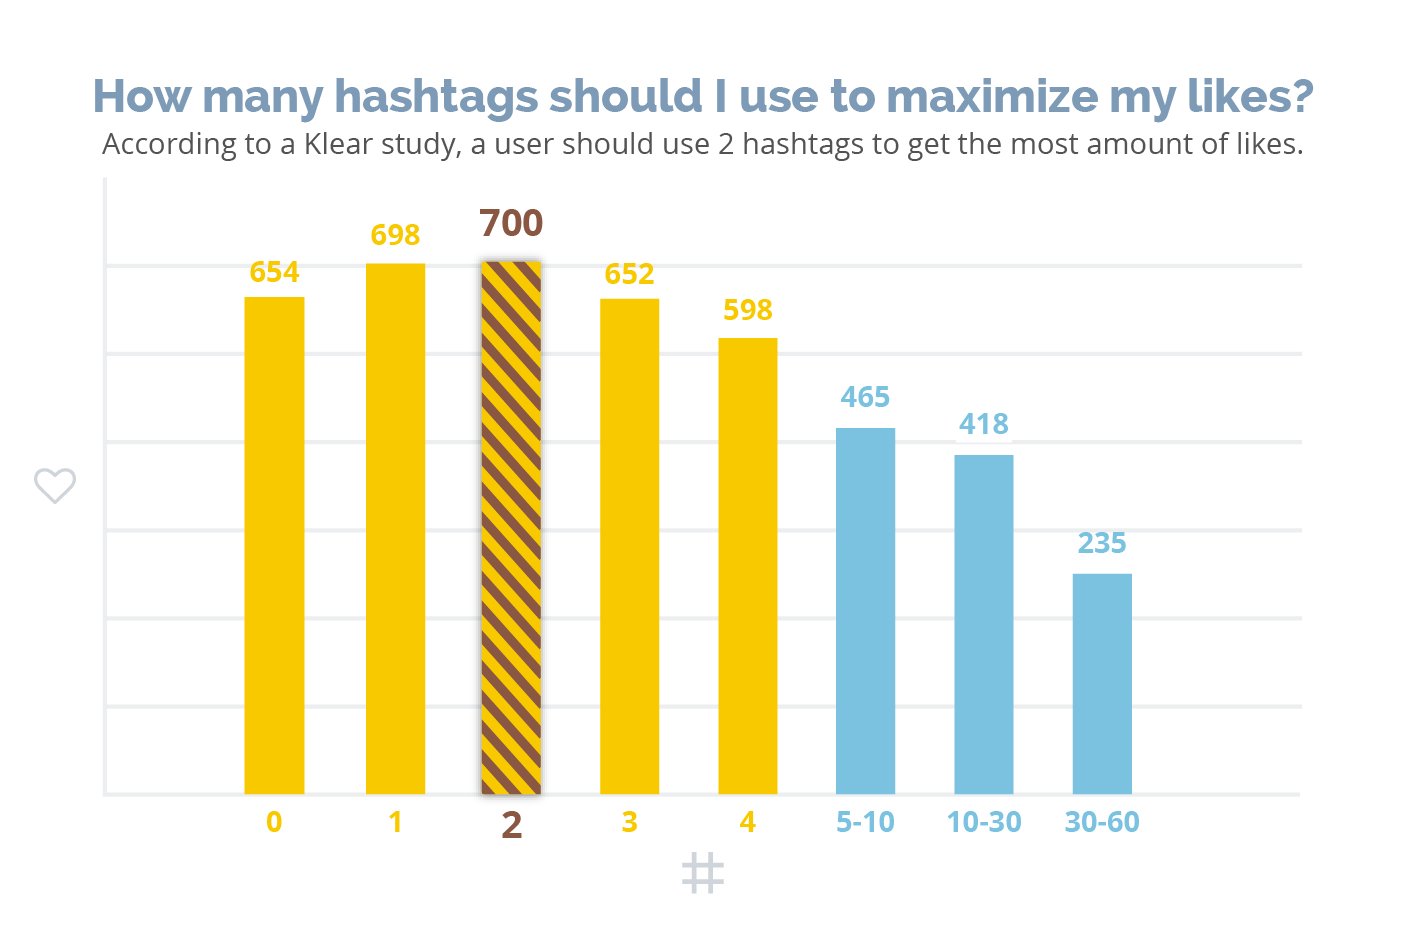 Hashtag usage